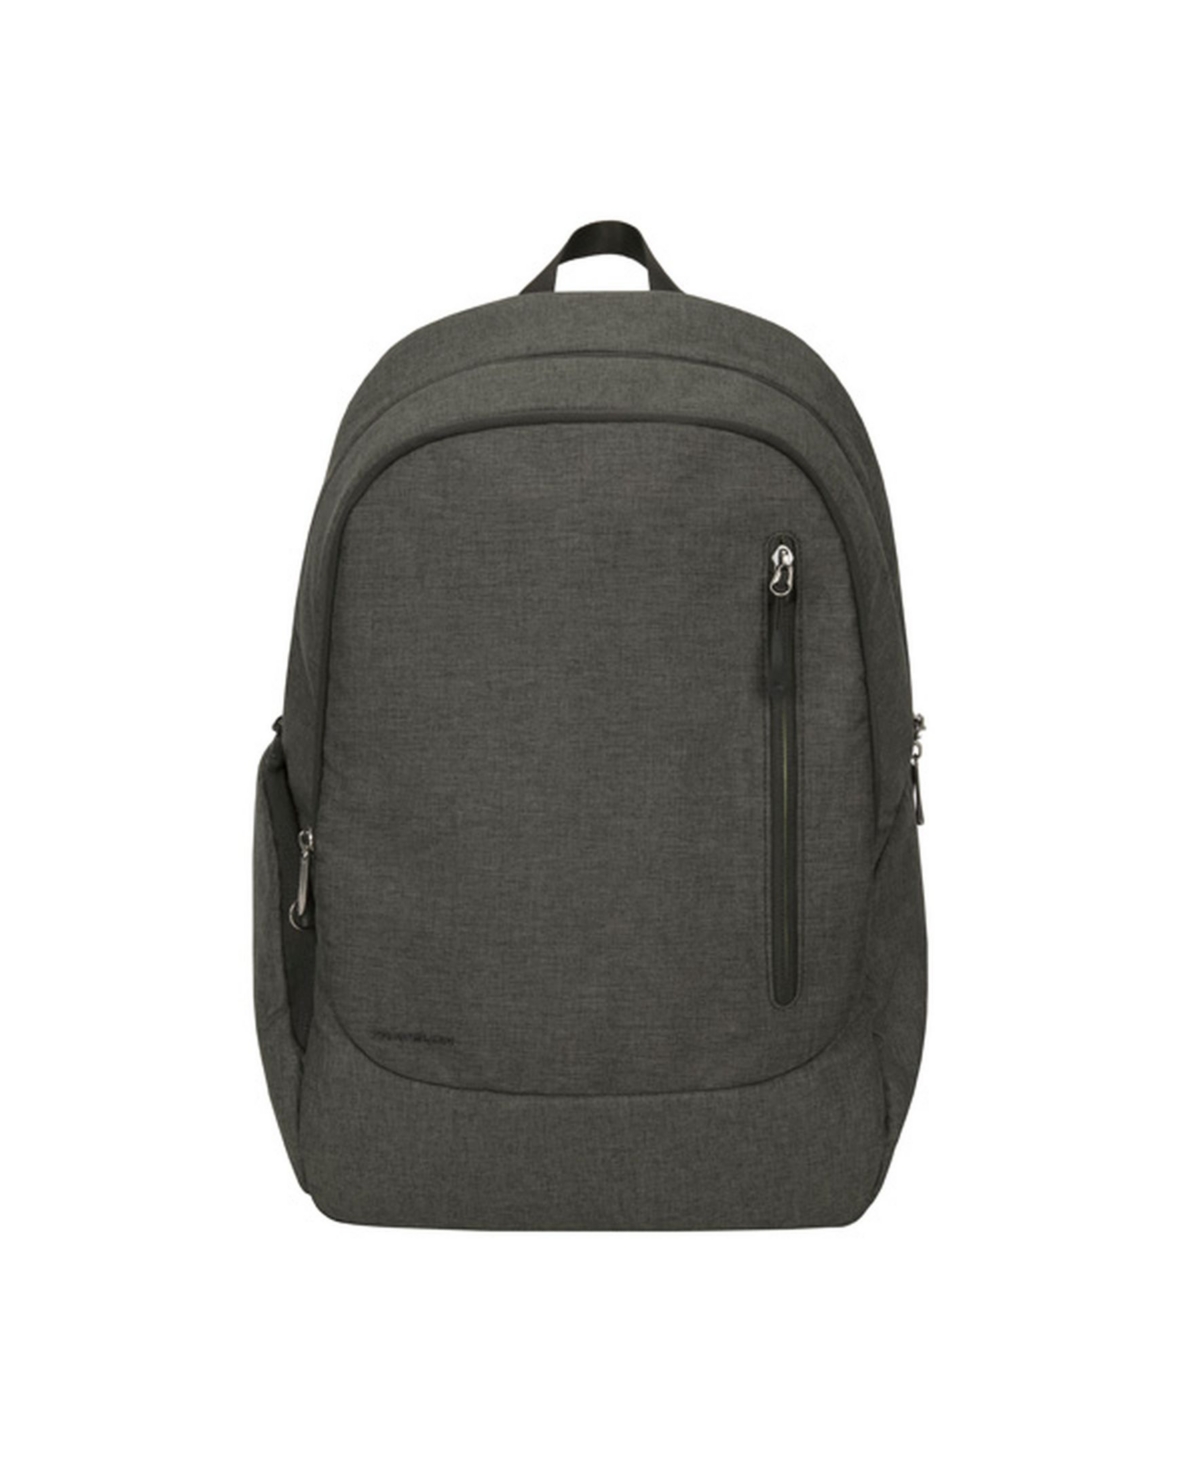 Anti-Theft Urban Laptop Backpack - Slate